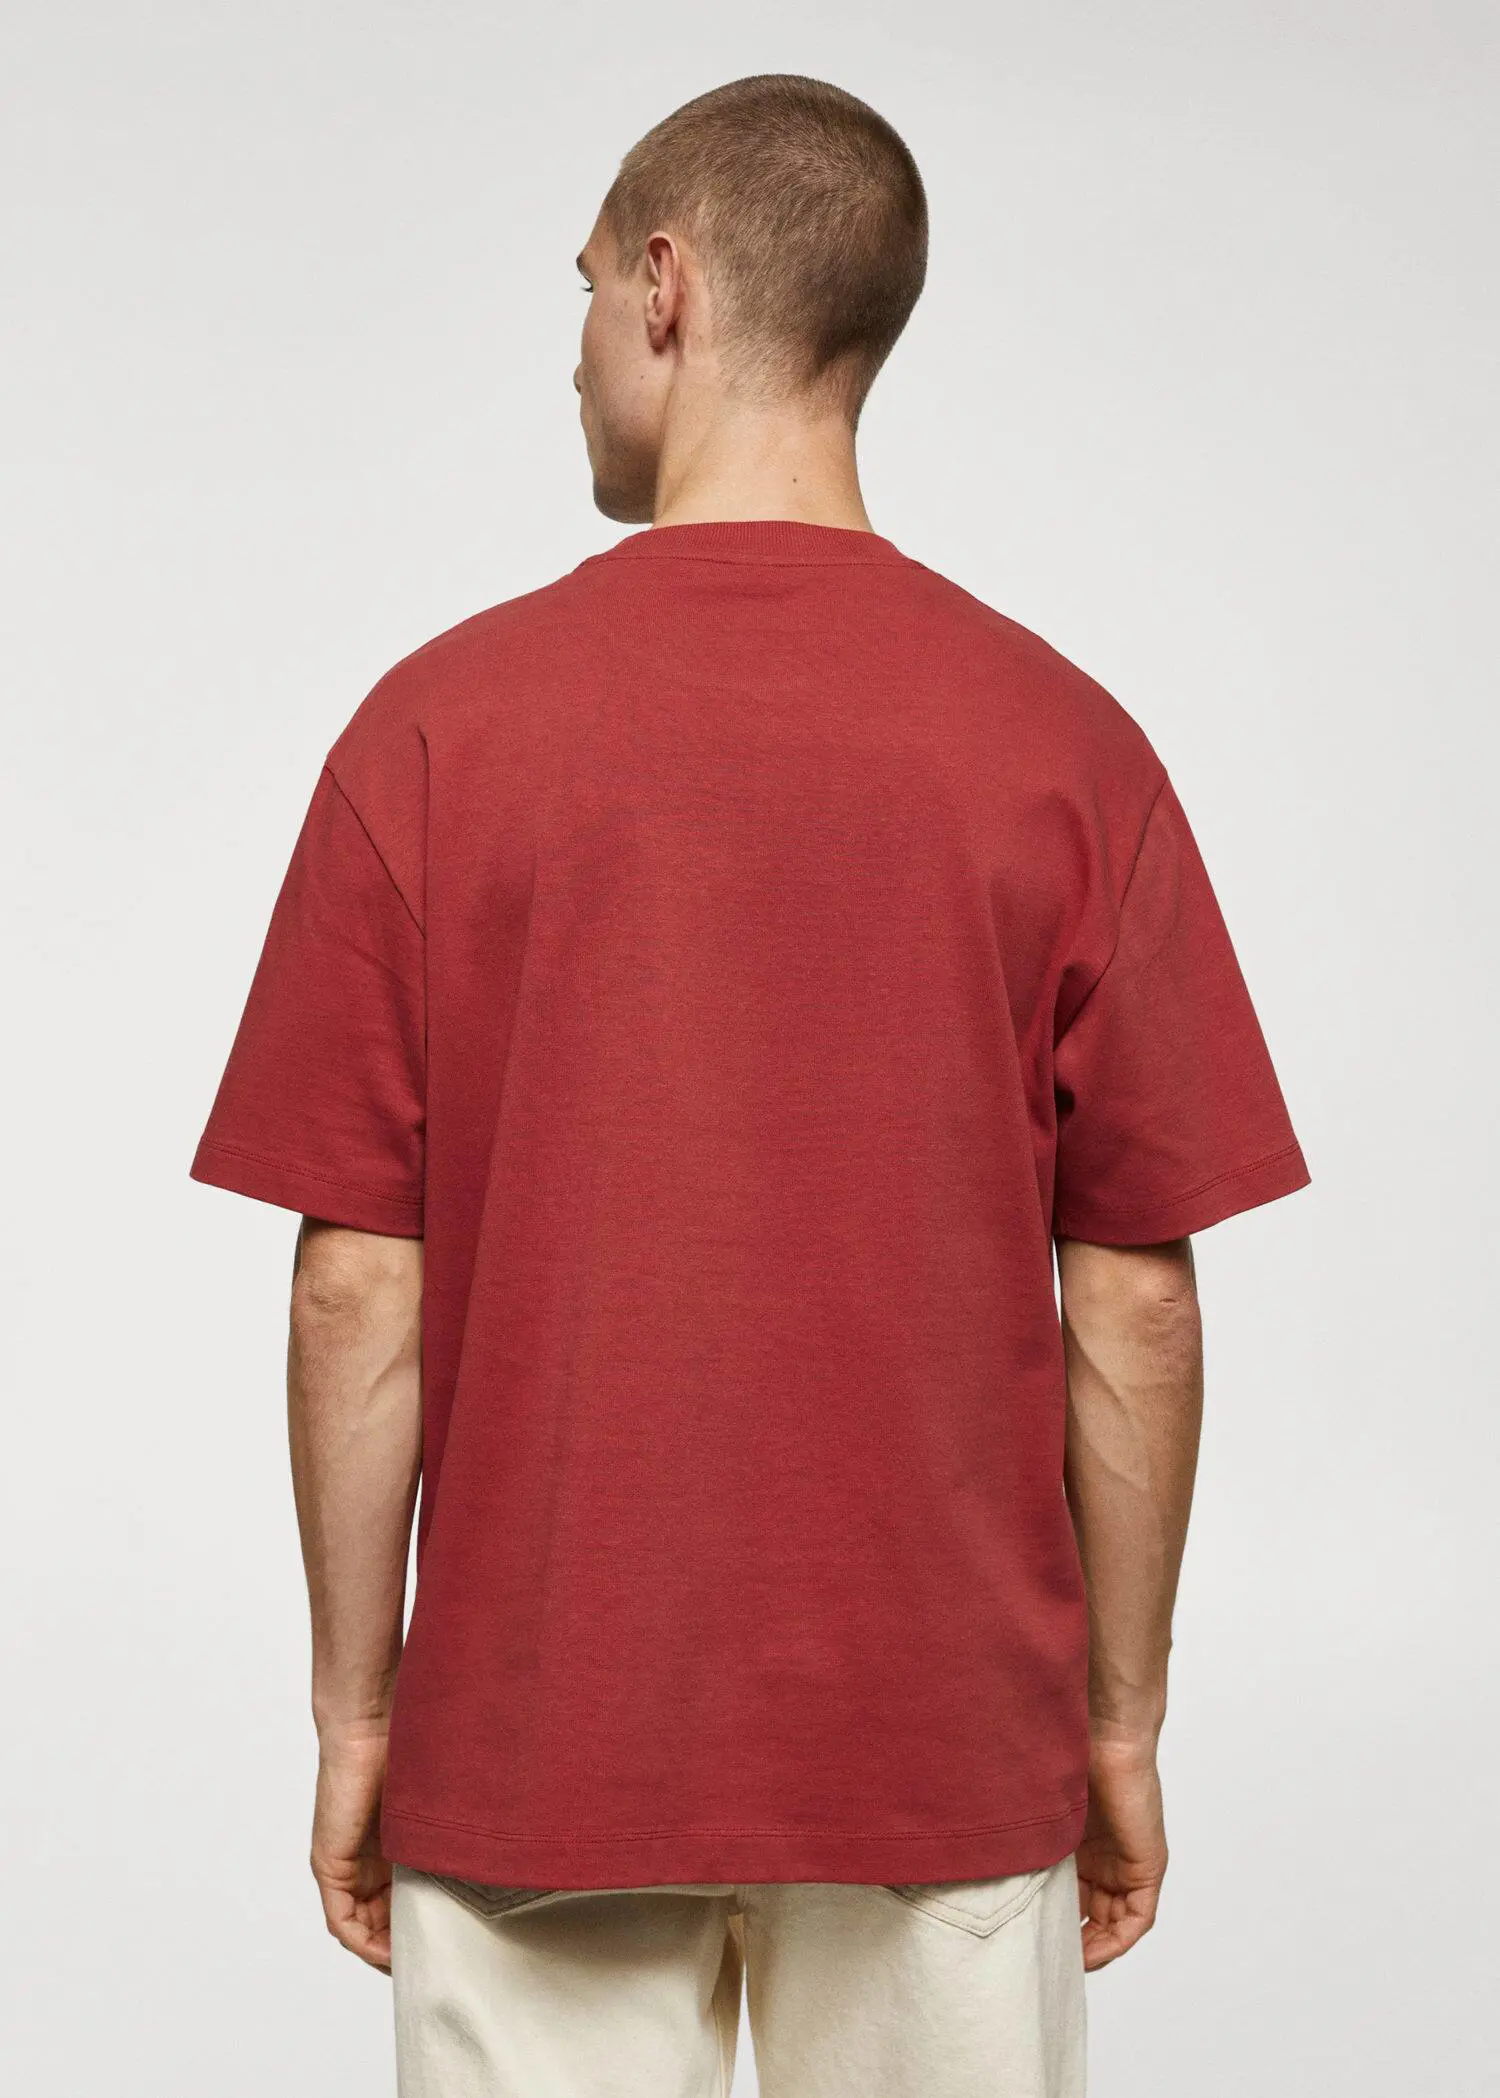 Mango T-shirt 100 % coton imprimé poitrine. 3